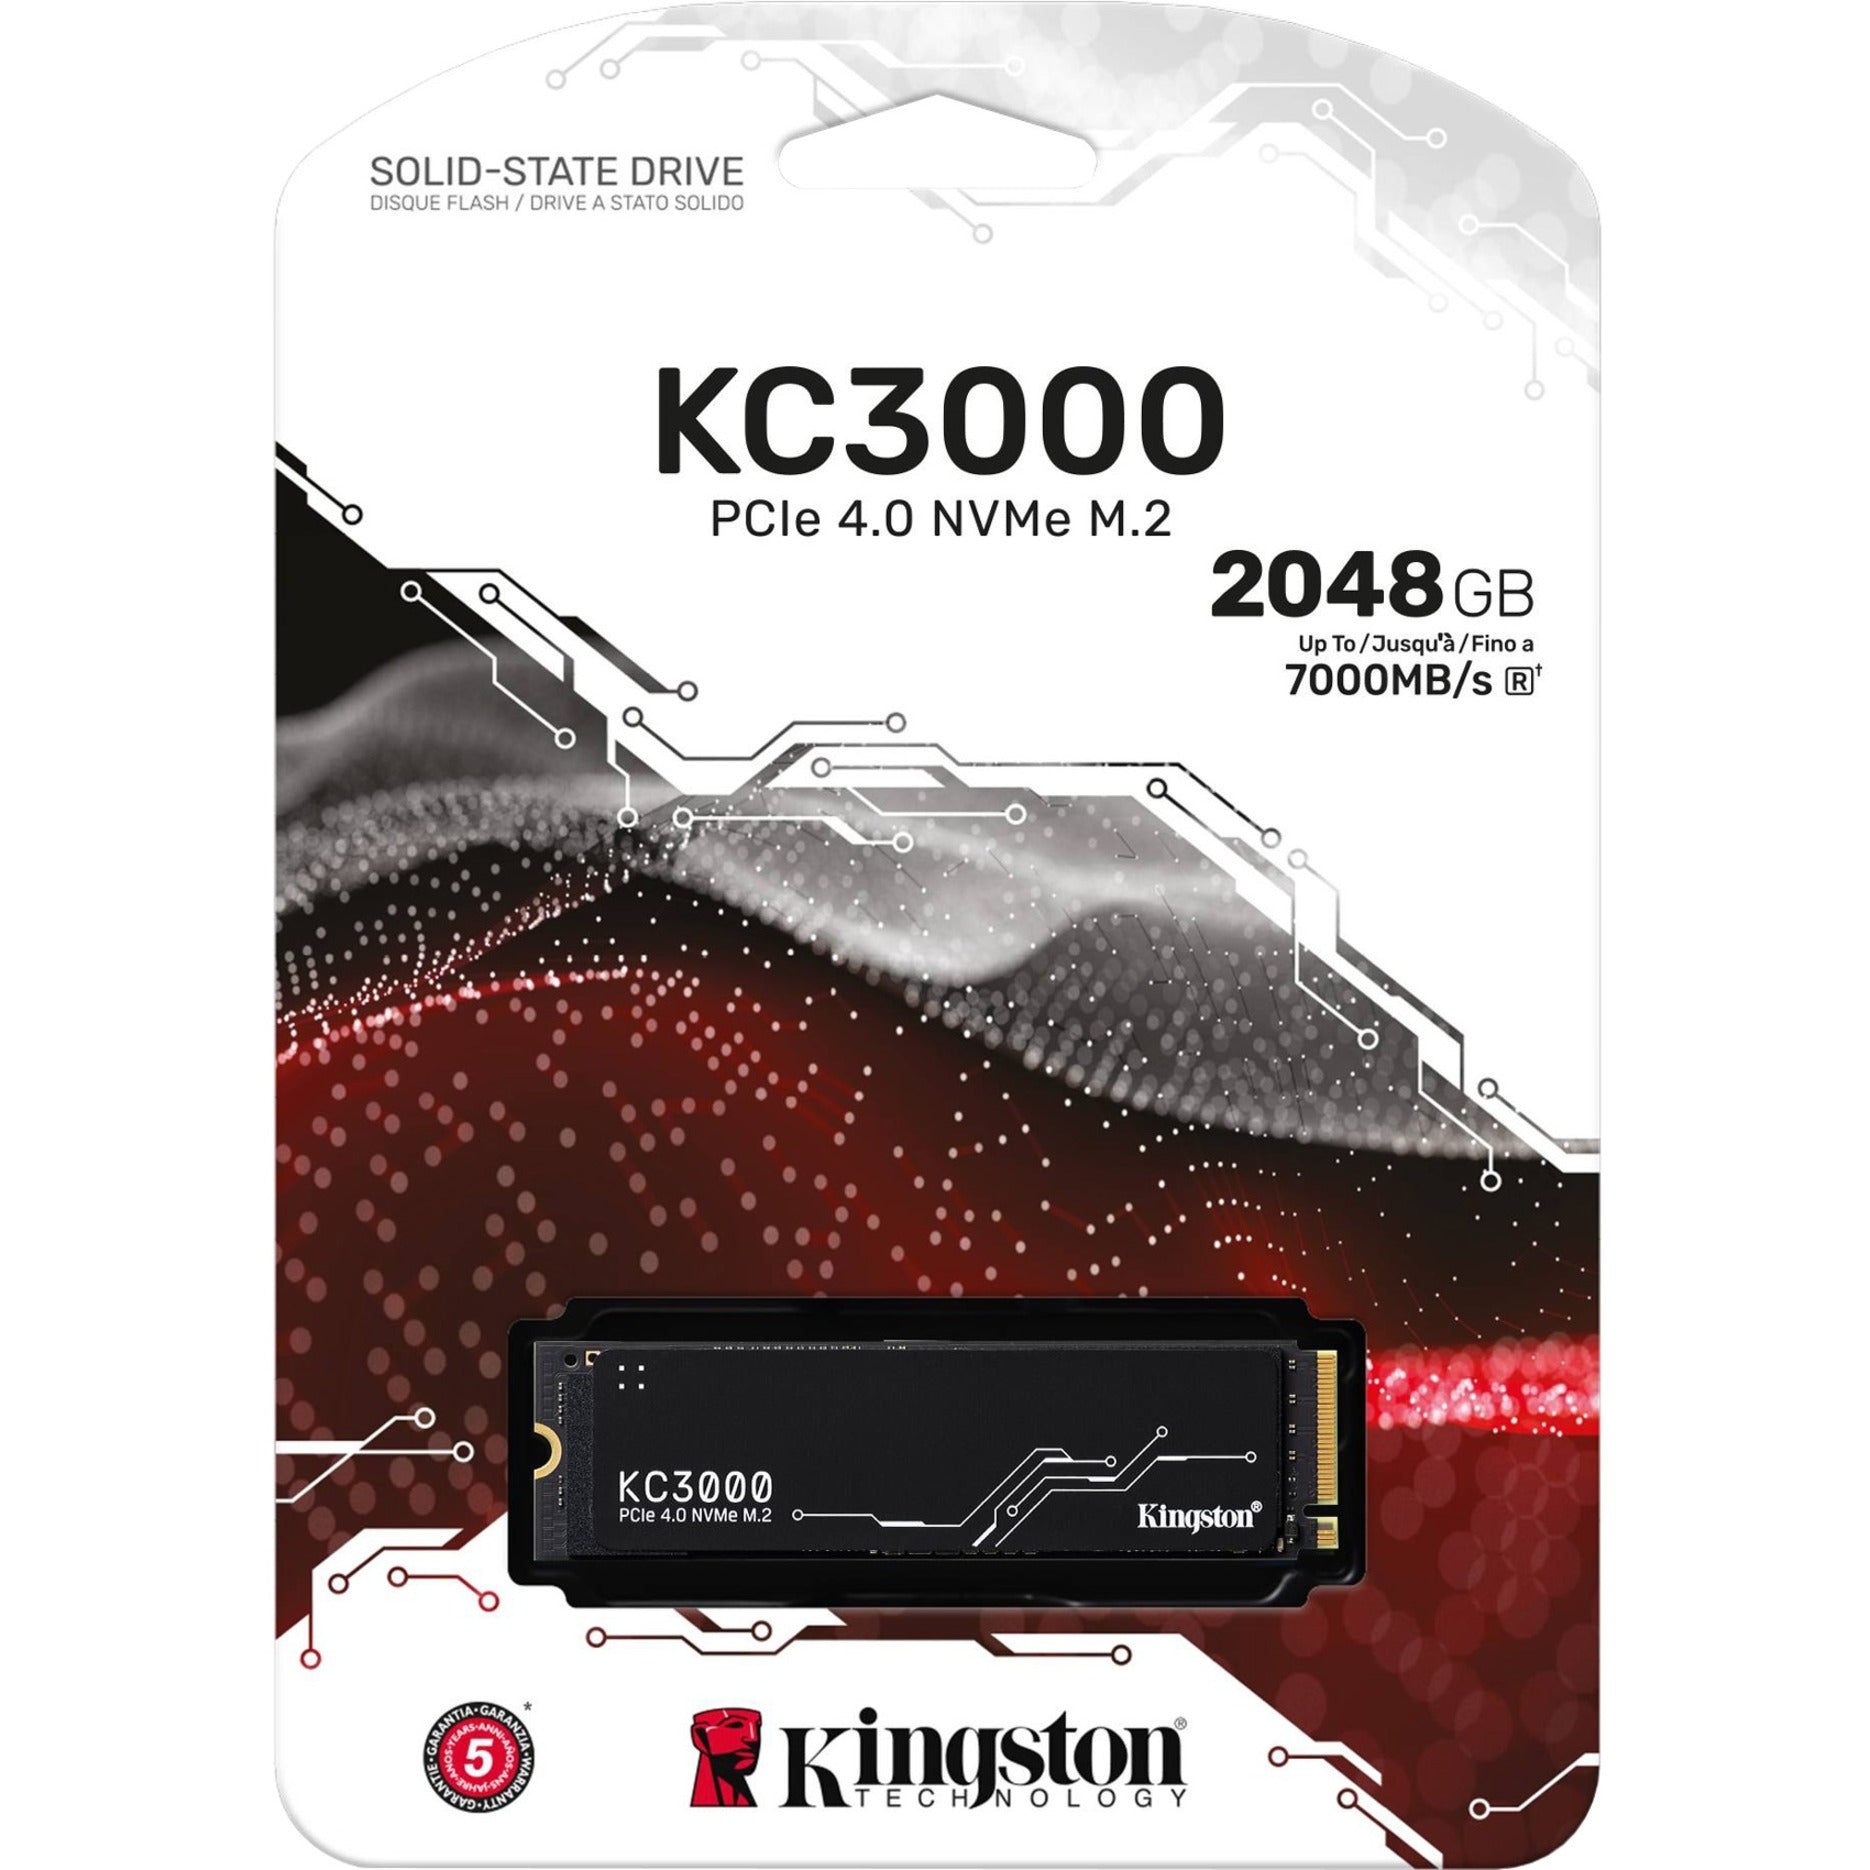 Kingston SKC3000D/2048G KC3000 PCIe 4.0 NVMe M.2 SSD, 2TB Storage Capacity, 5 Year Warranty, 7000 MB/s Transfer Rate